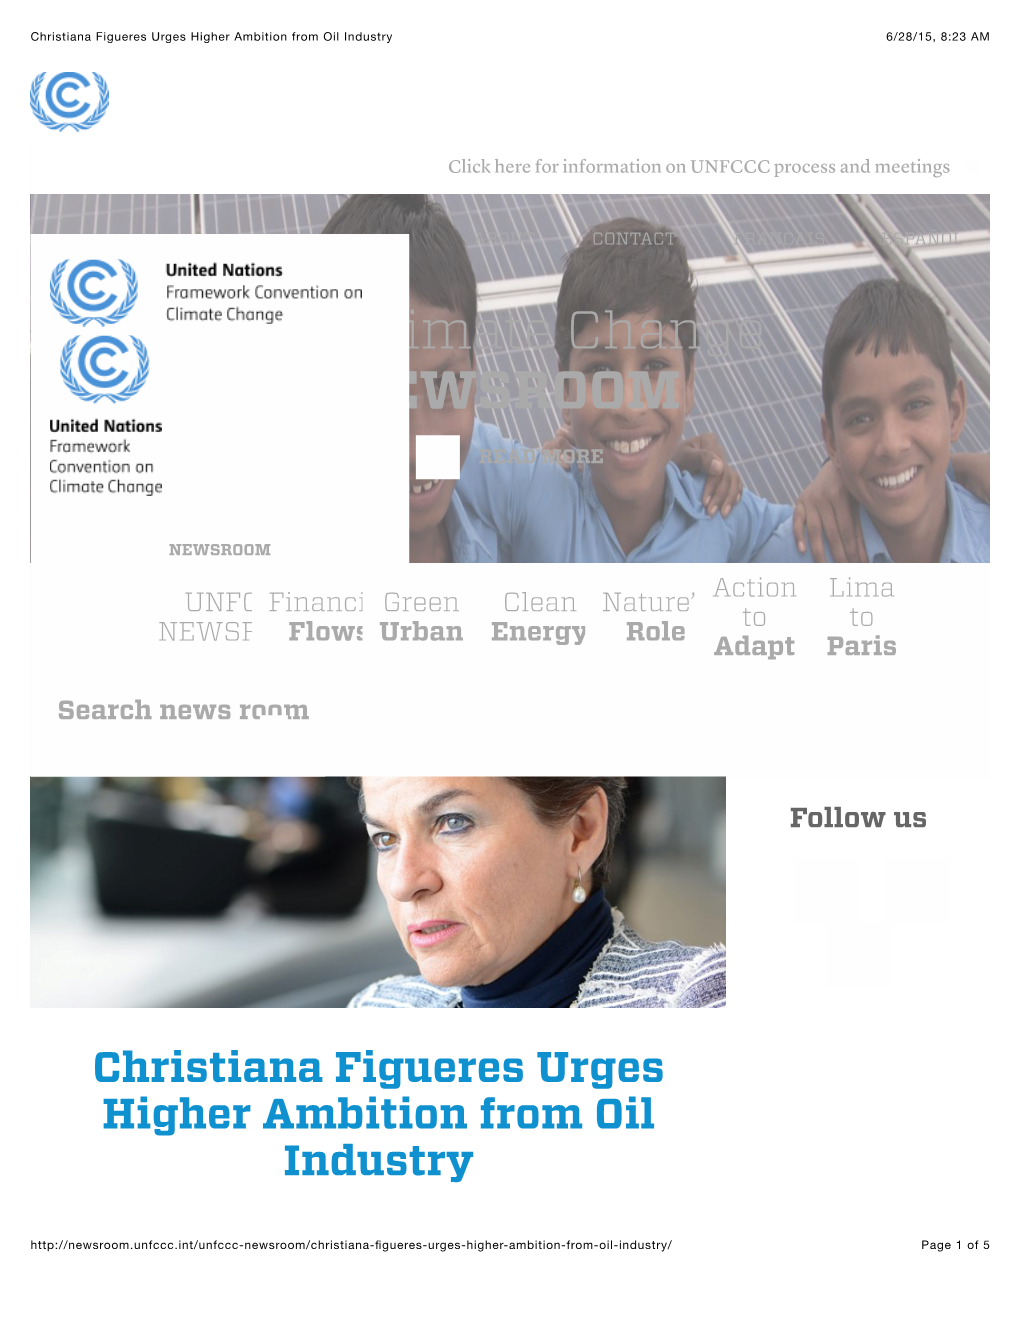 UN Climate Change NEWSROOM